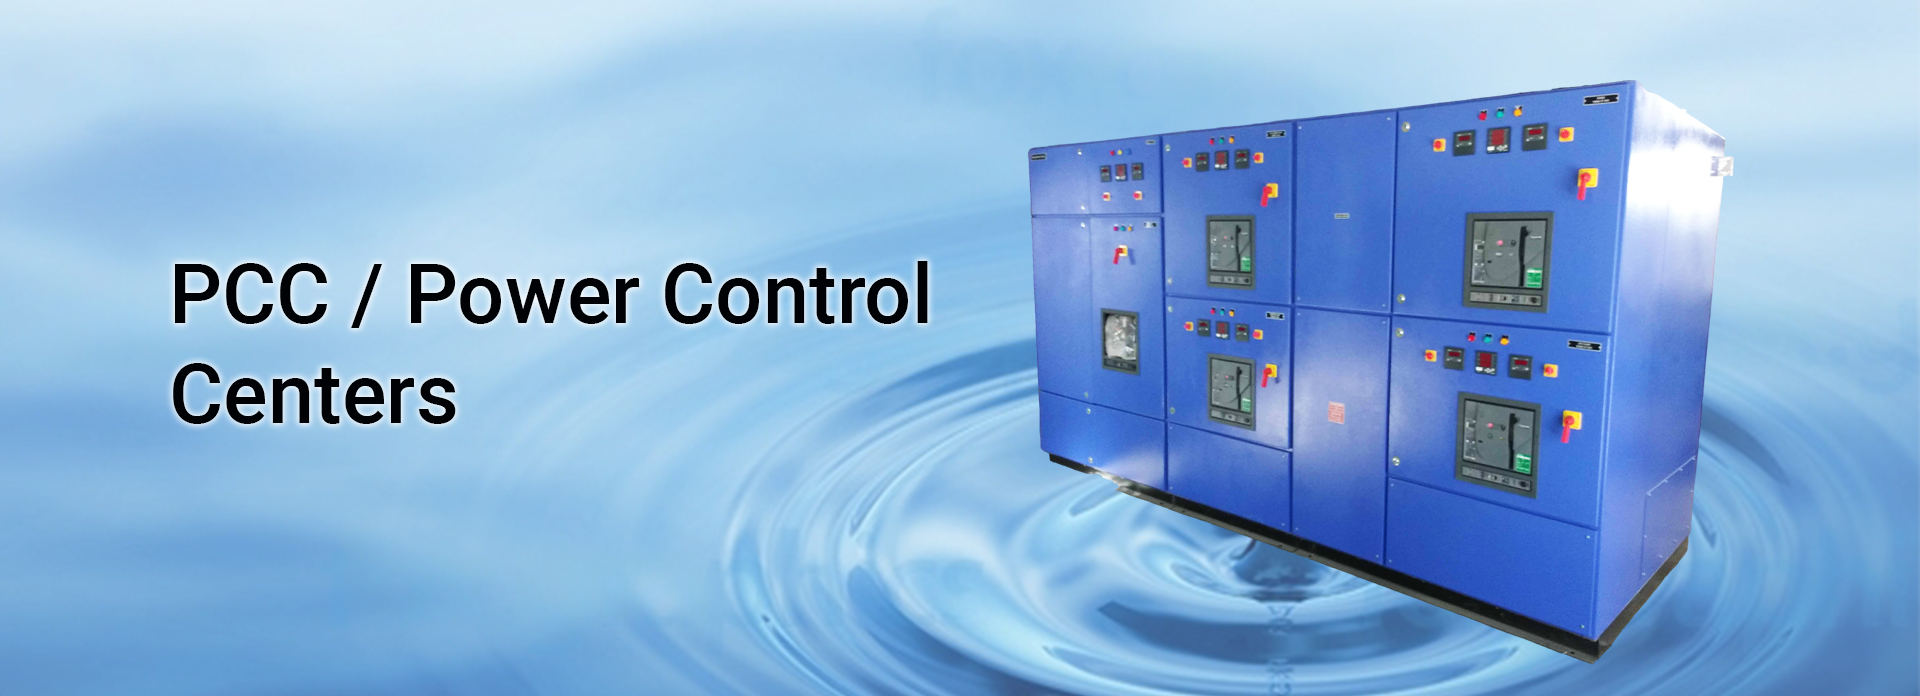 PCC / Power Control Centers